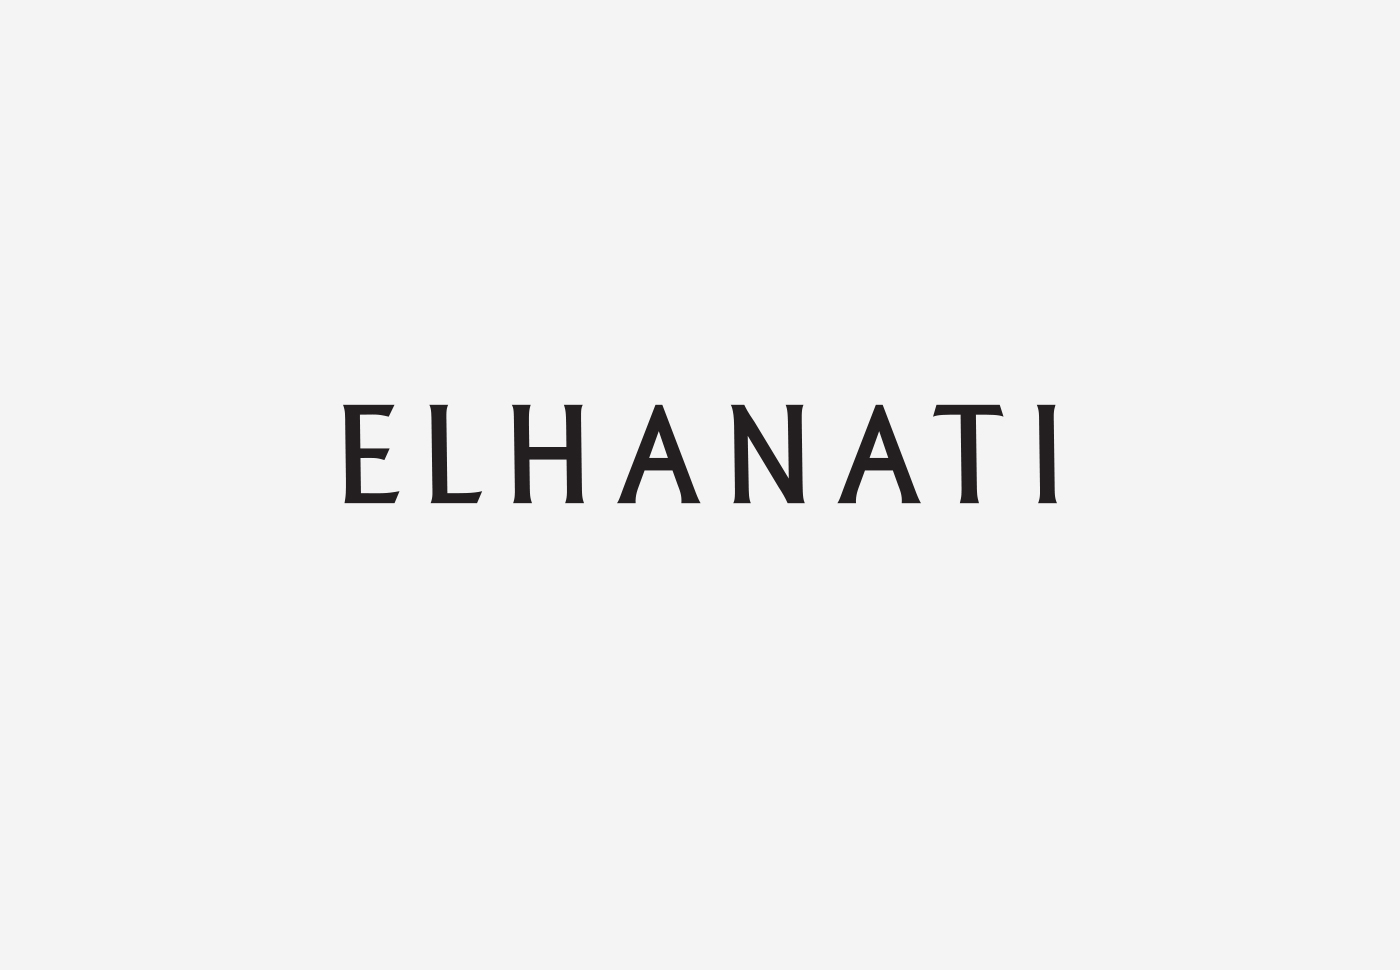 Elhanati – Visual identity